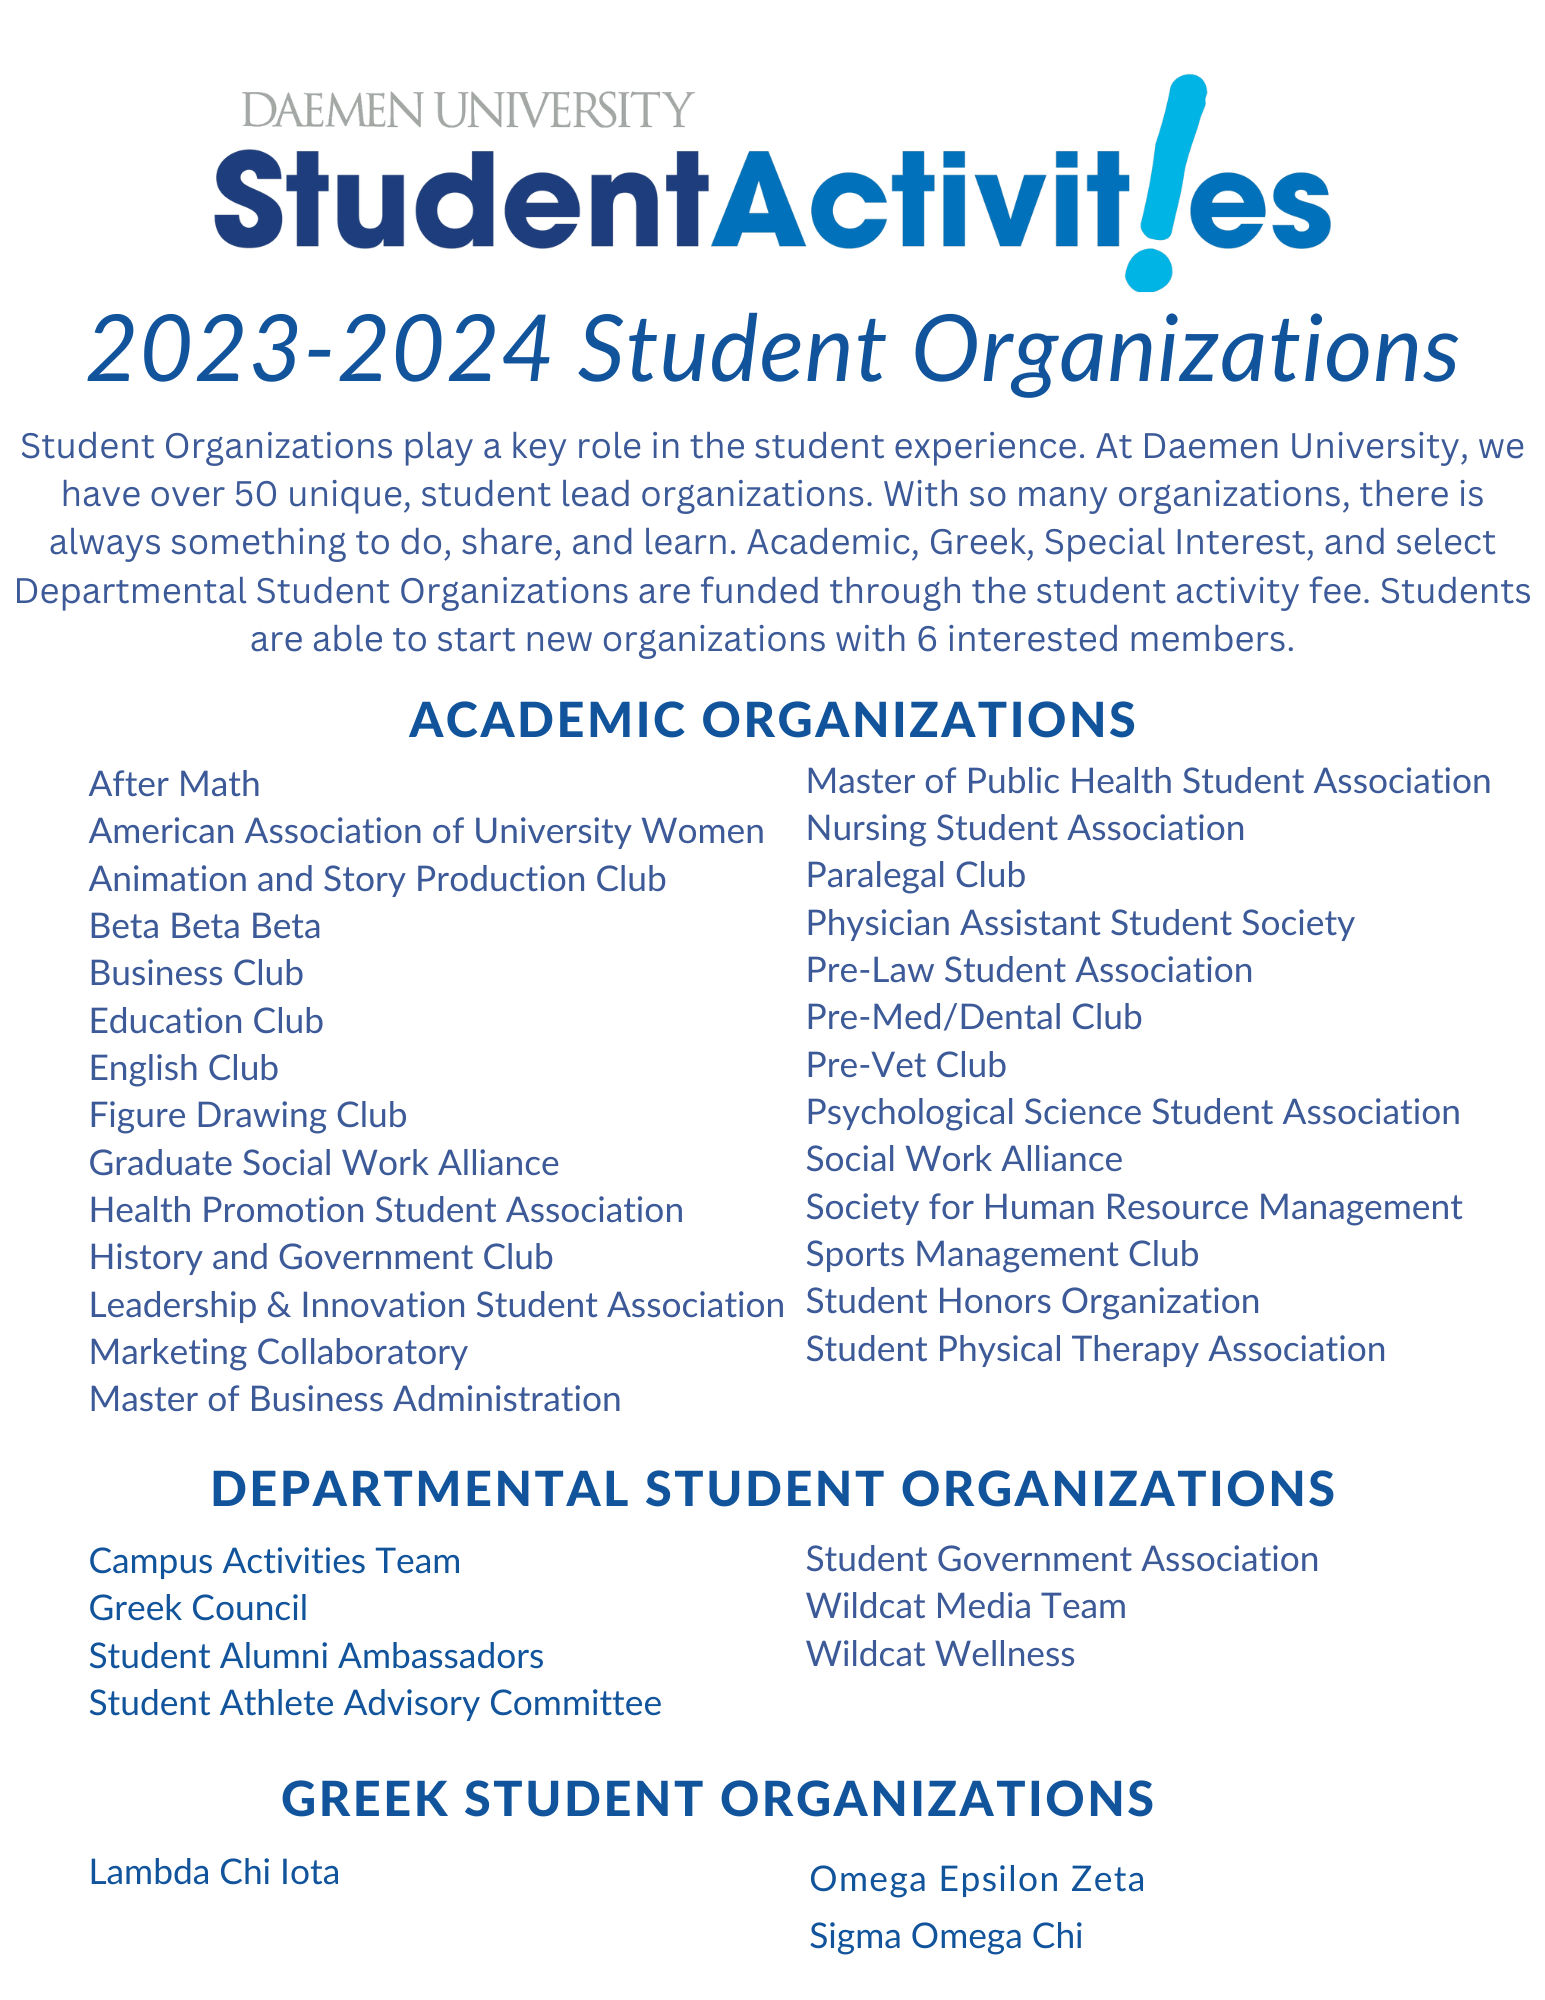 List of Student Organizations